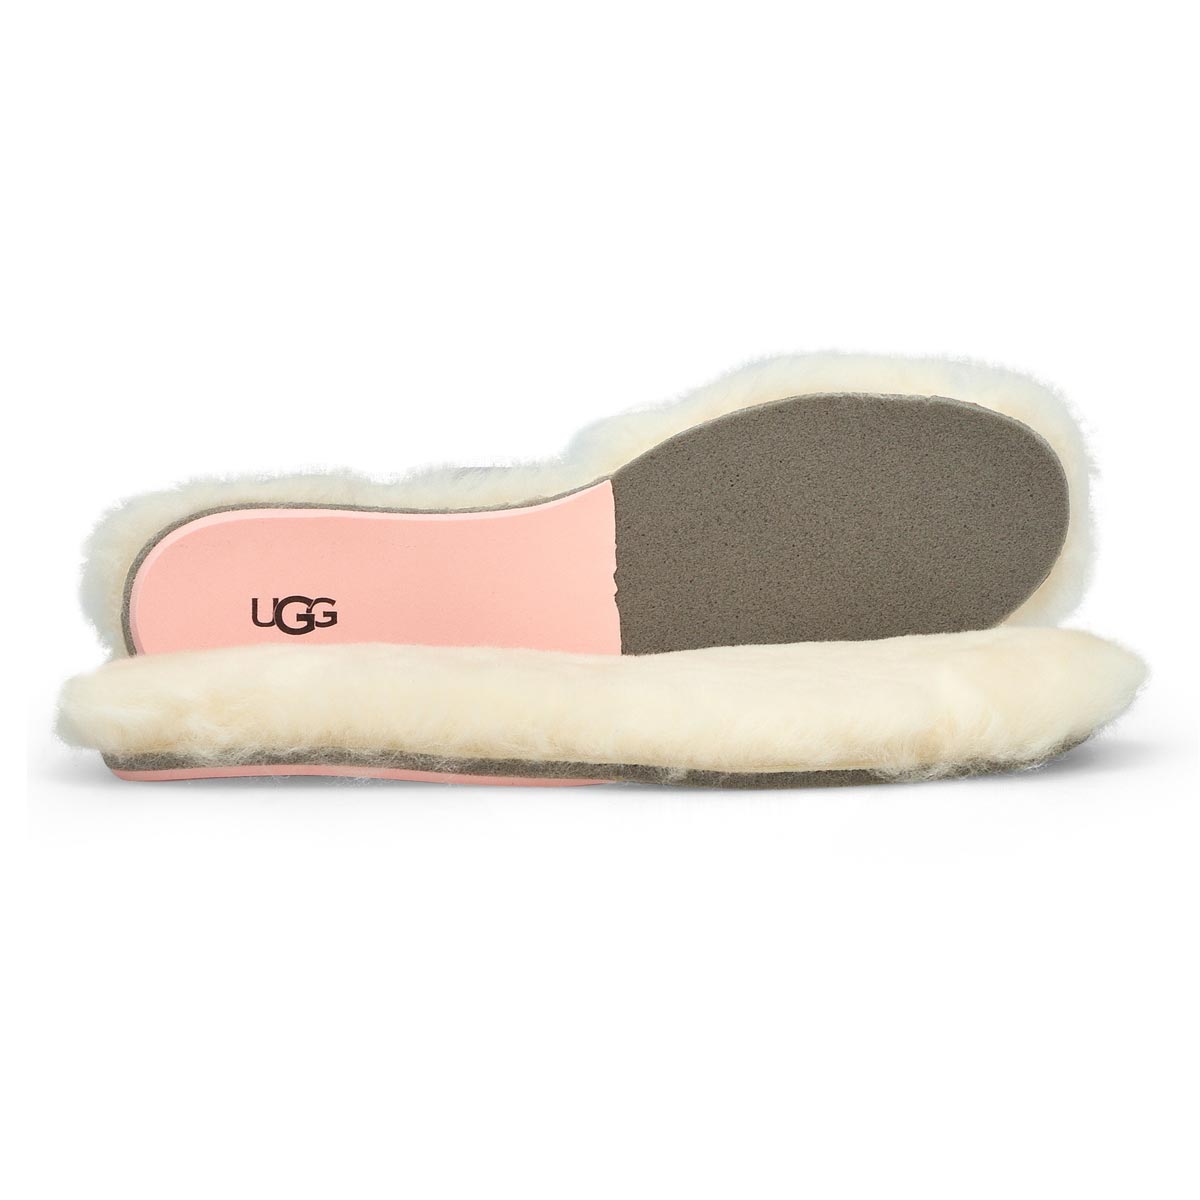 UGG Australia Shoe Insoles for sale | eBay